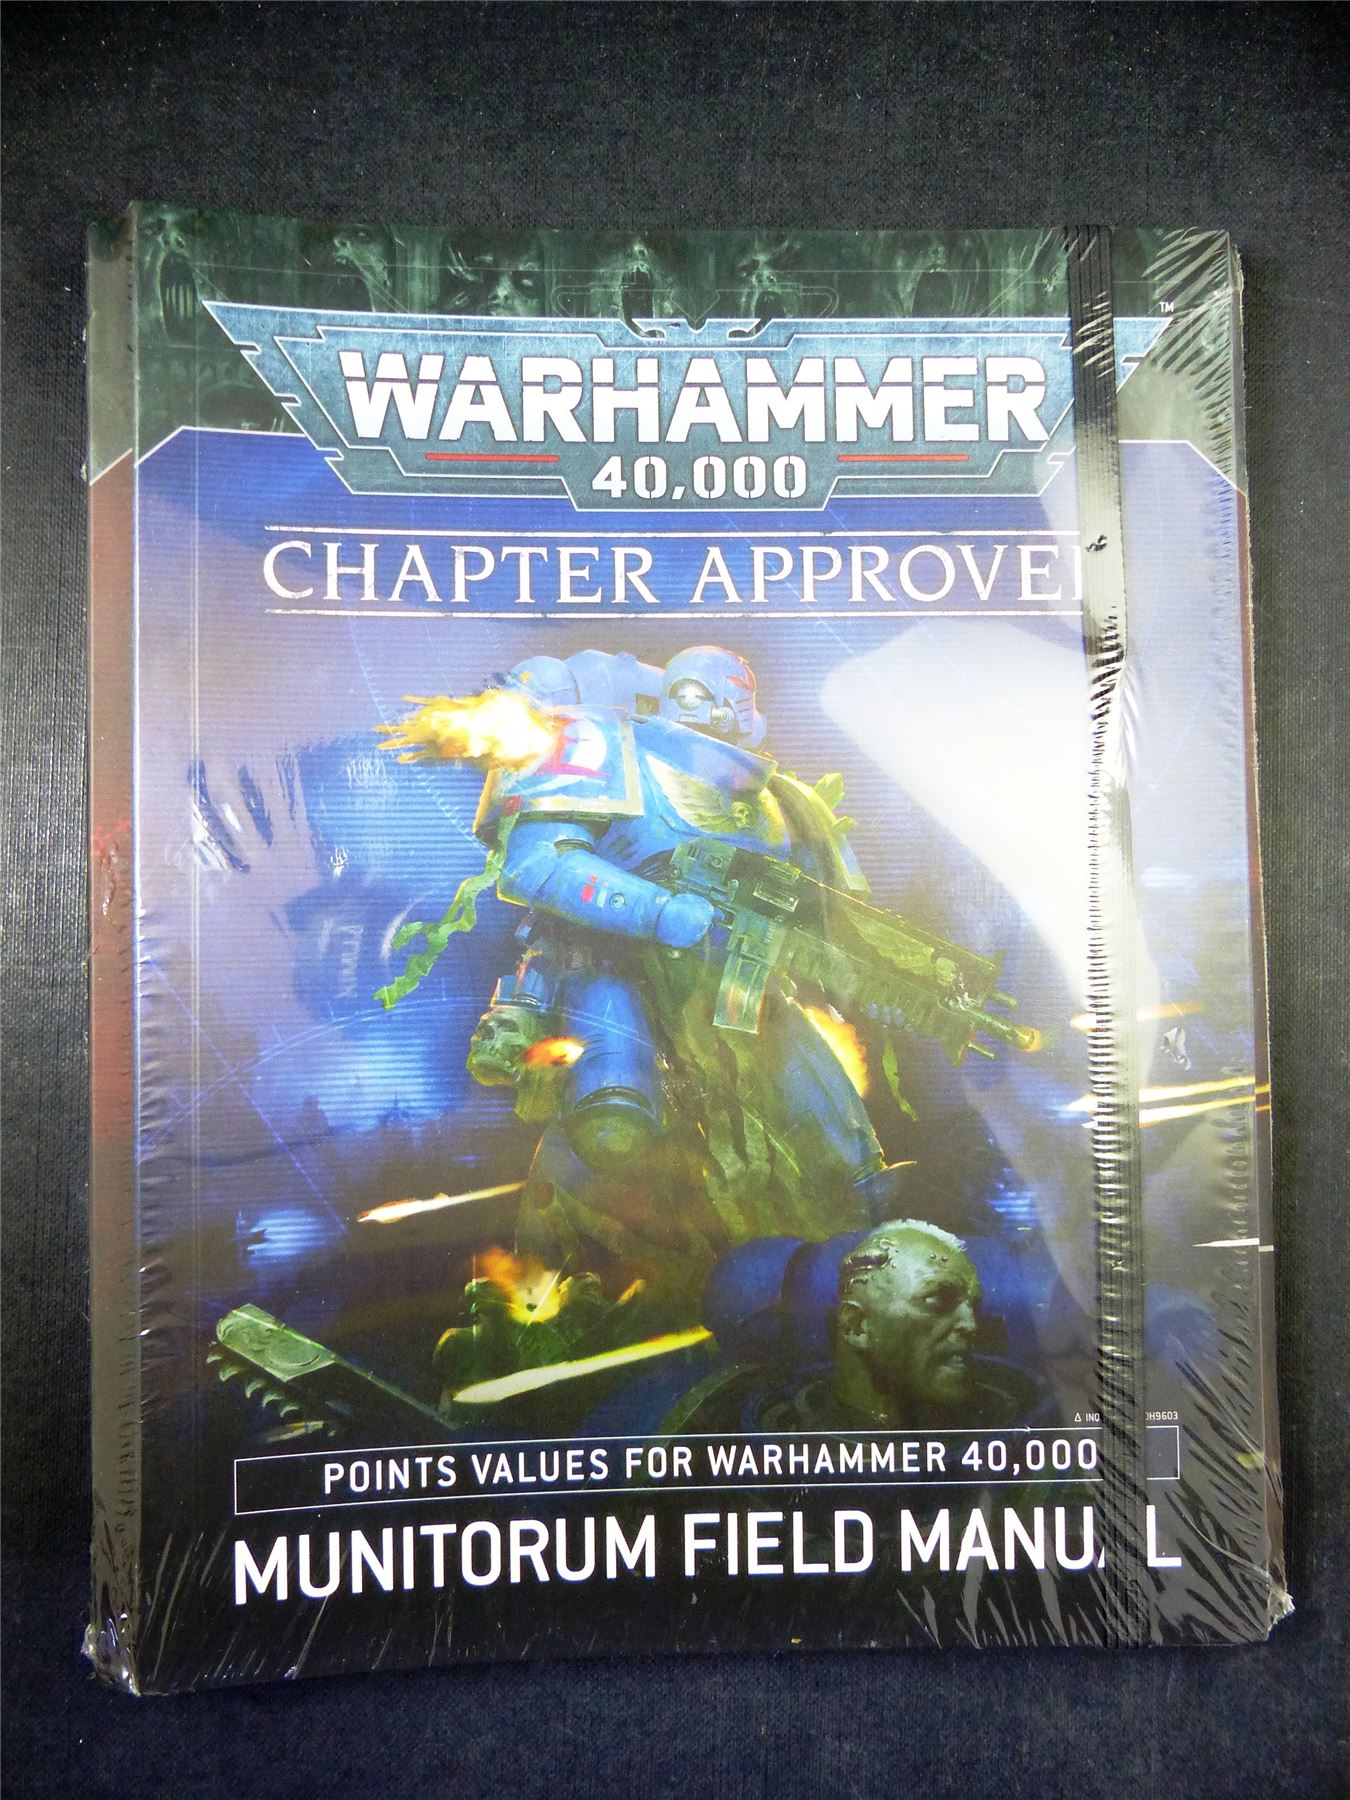 Warhammer Muntorum Fvield Manu - Warhammer AoS 40k #6E8